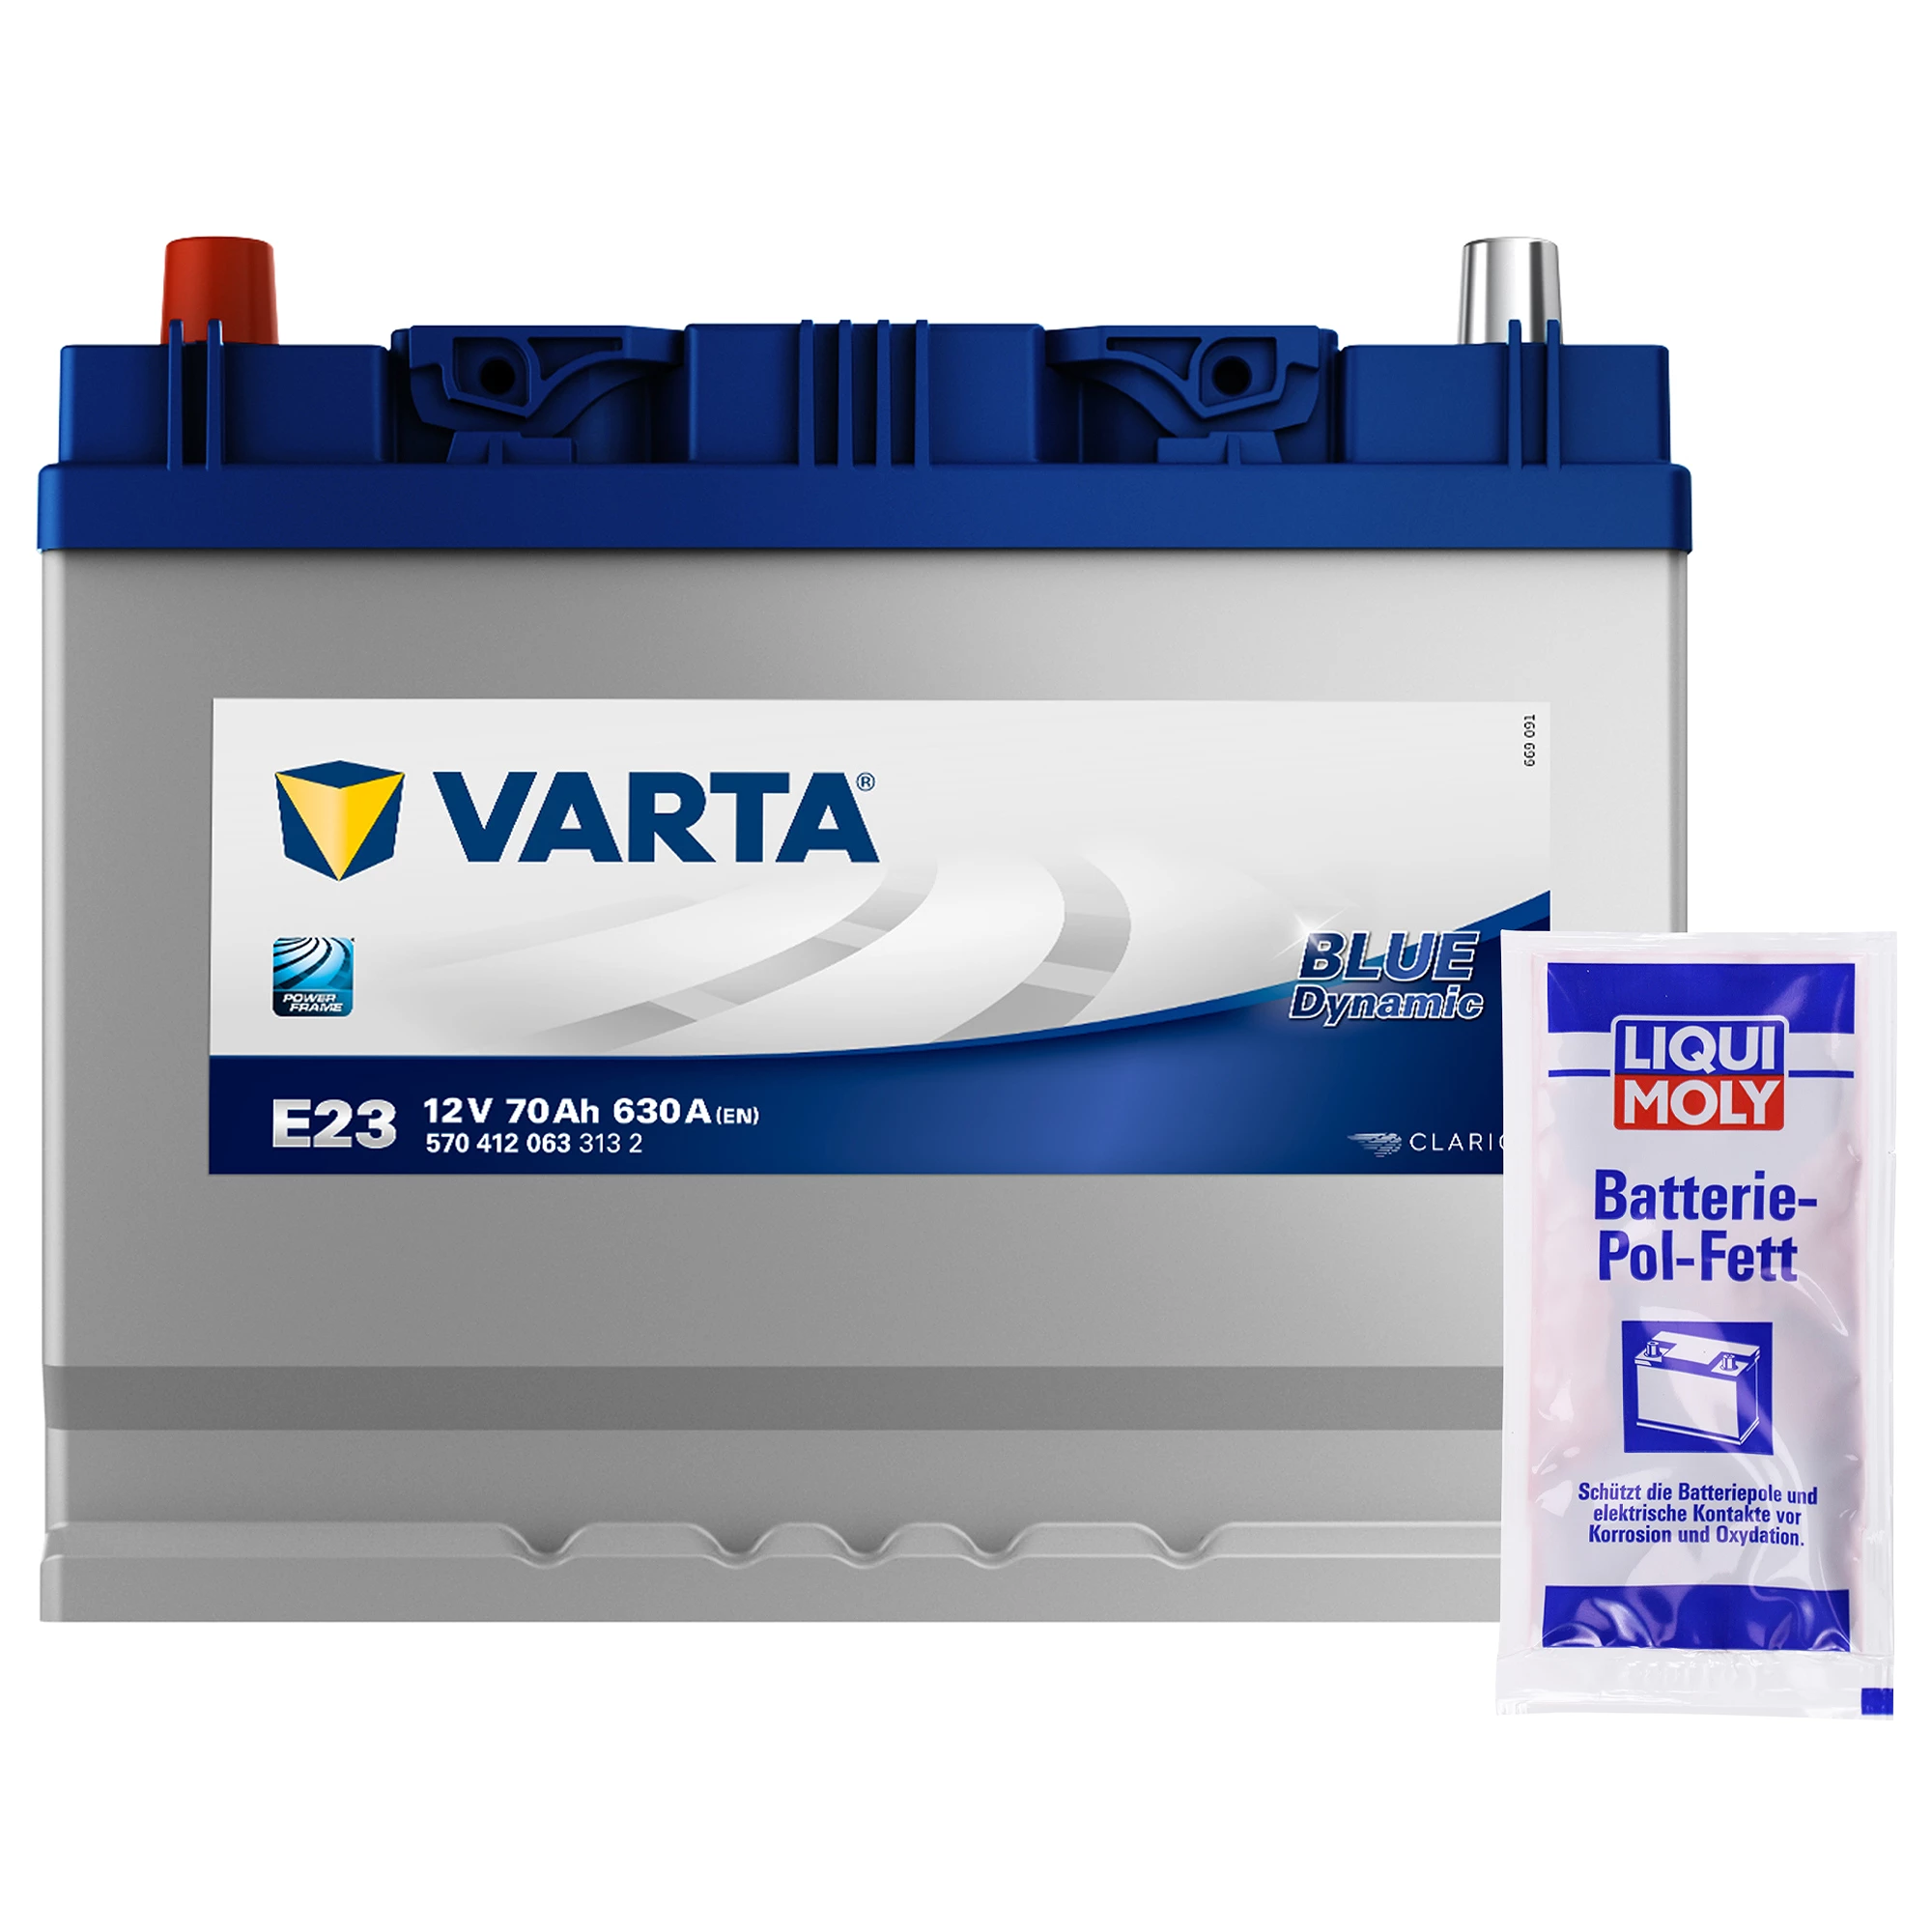 VARTA VARTA Starterbatterie BLUE dynamic 70Ah 630A E23+10g Pol